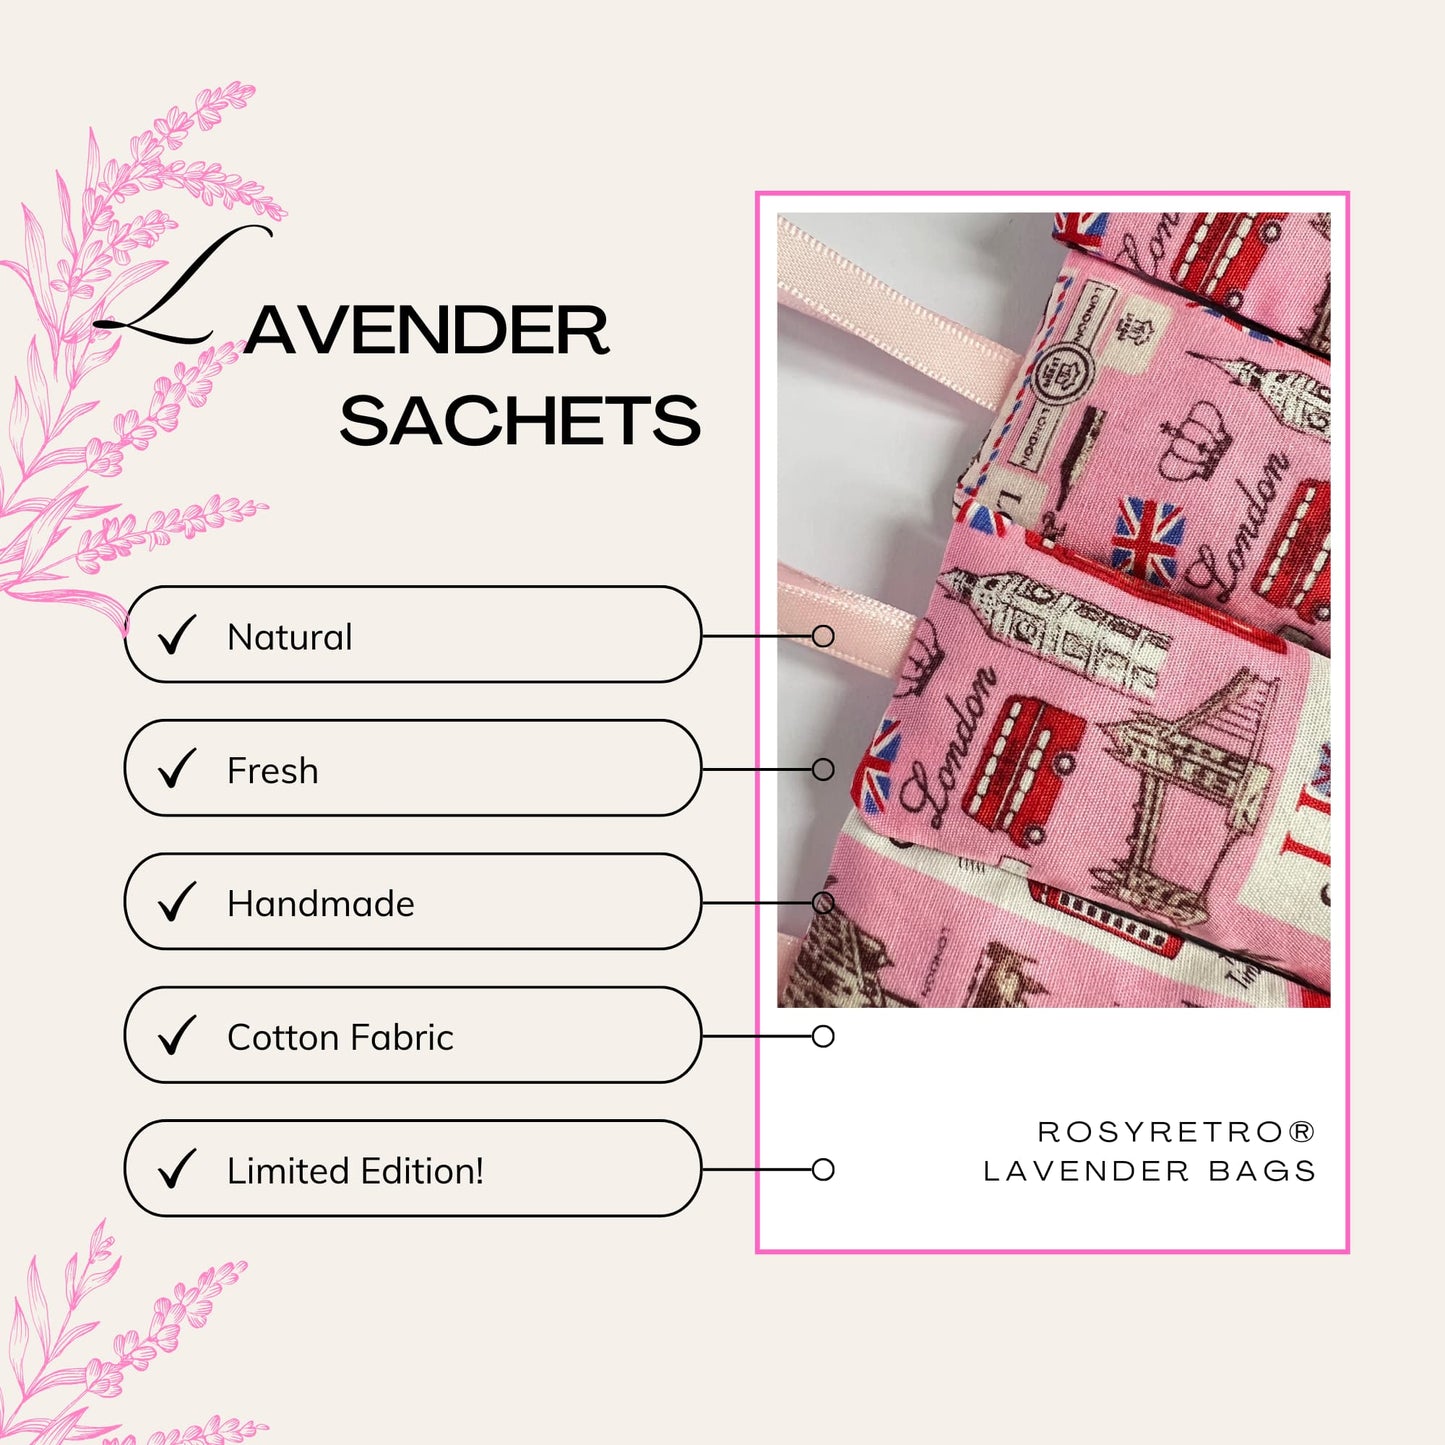 Aromatic Lavender Sachets in Pink London print - Sugar London